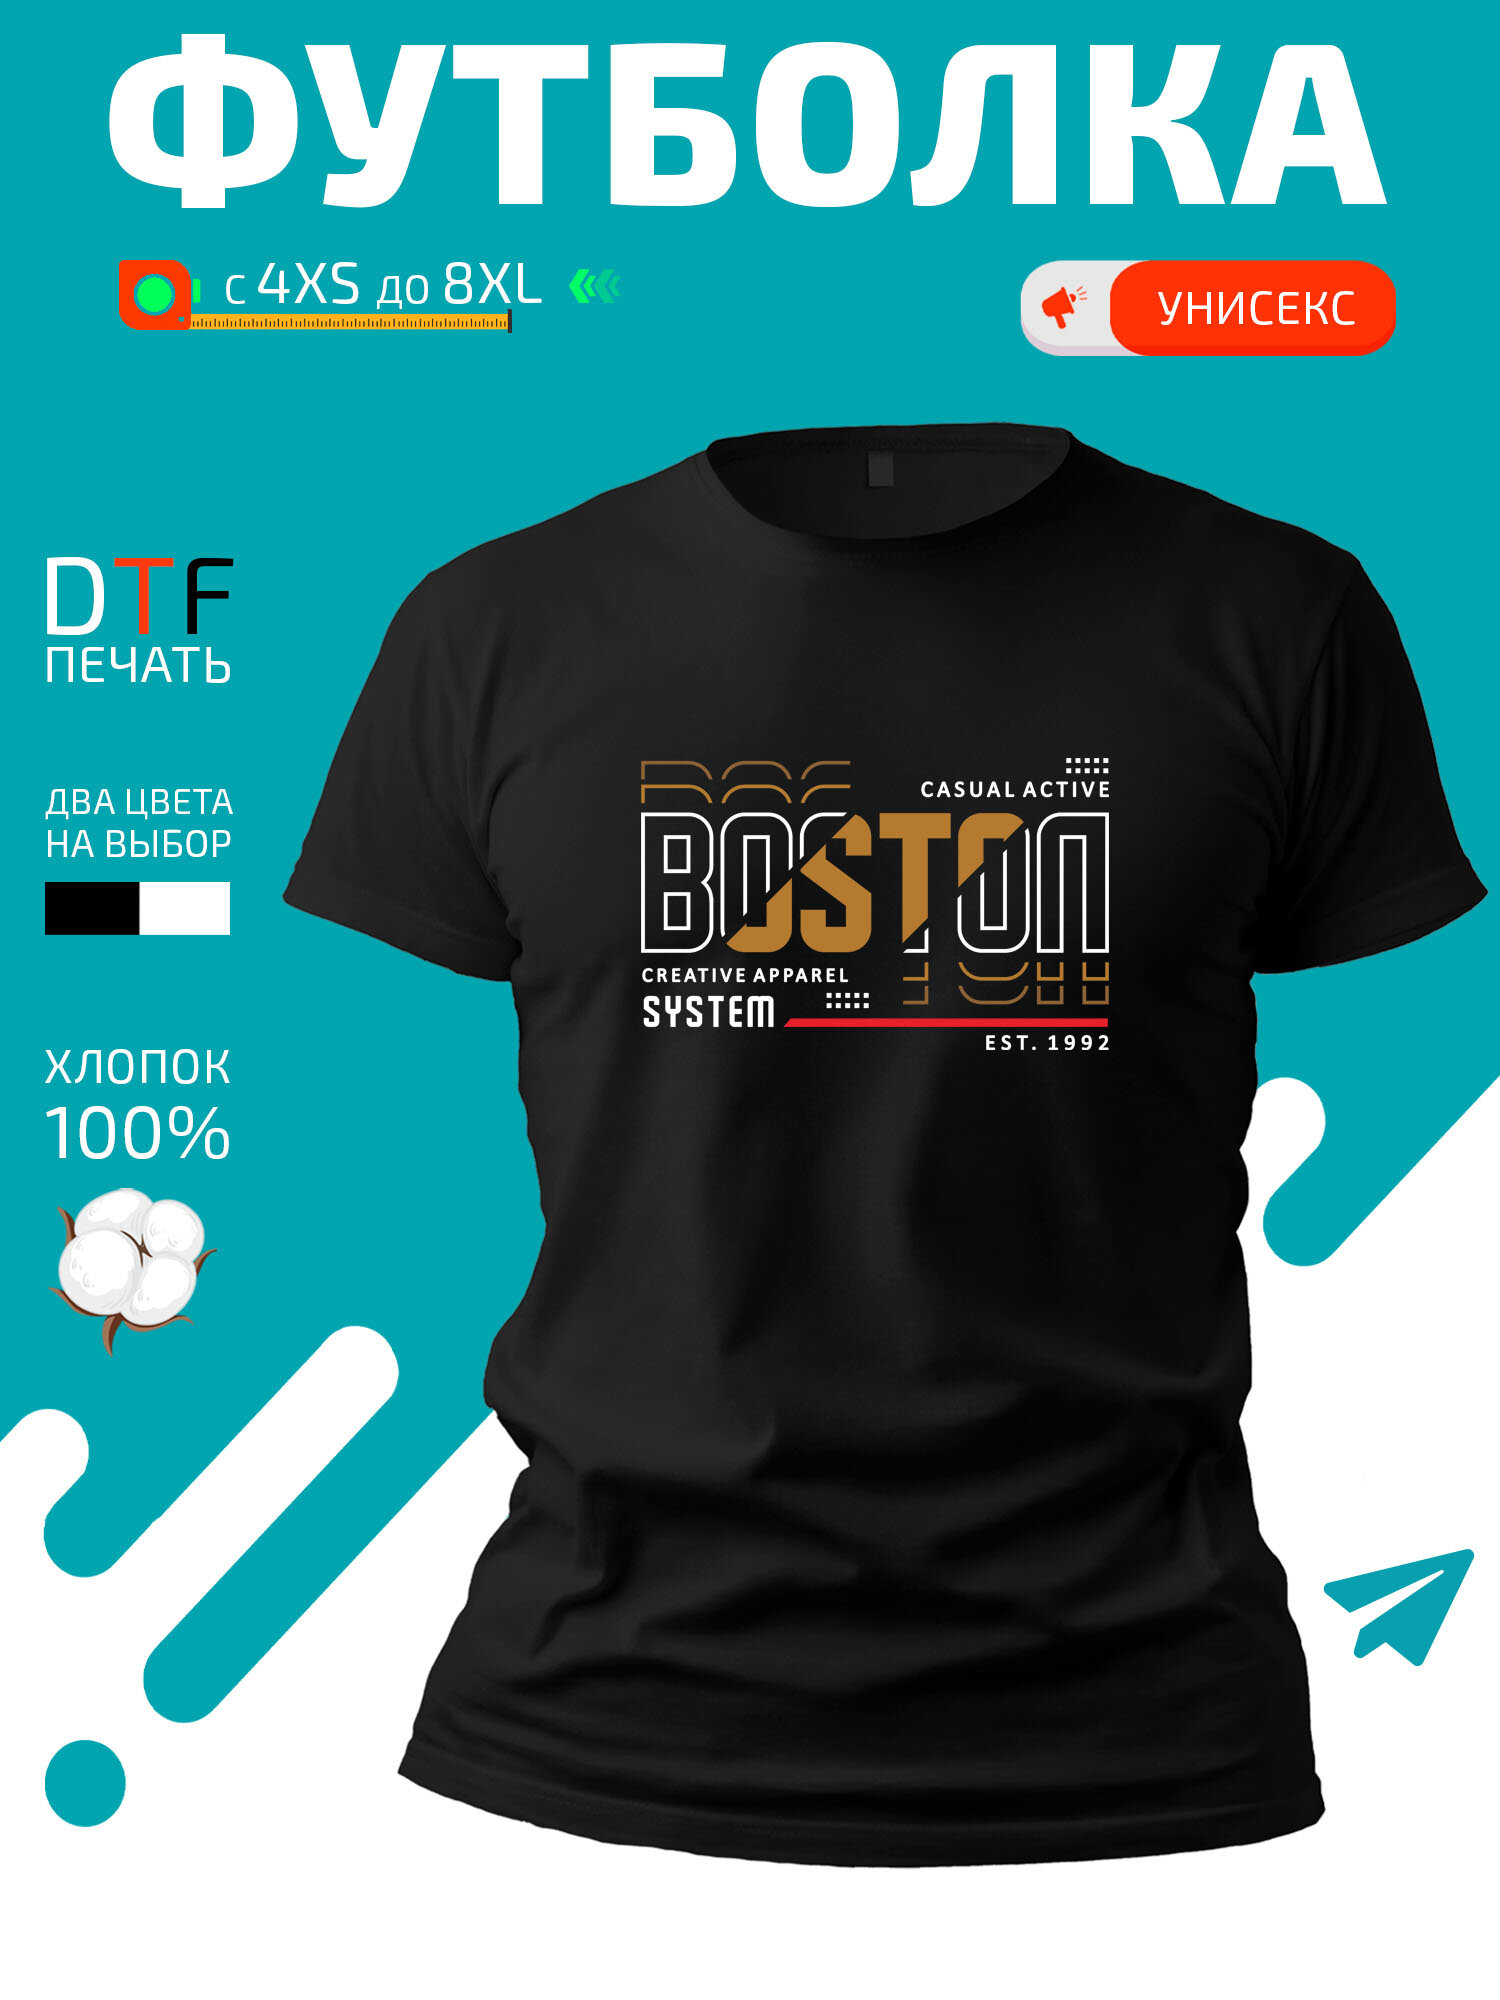 Футболка Boston casual active creative apparel-Бостон повседневная креативная одежда